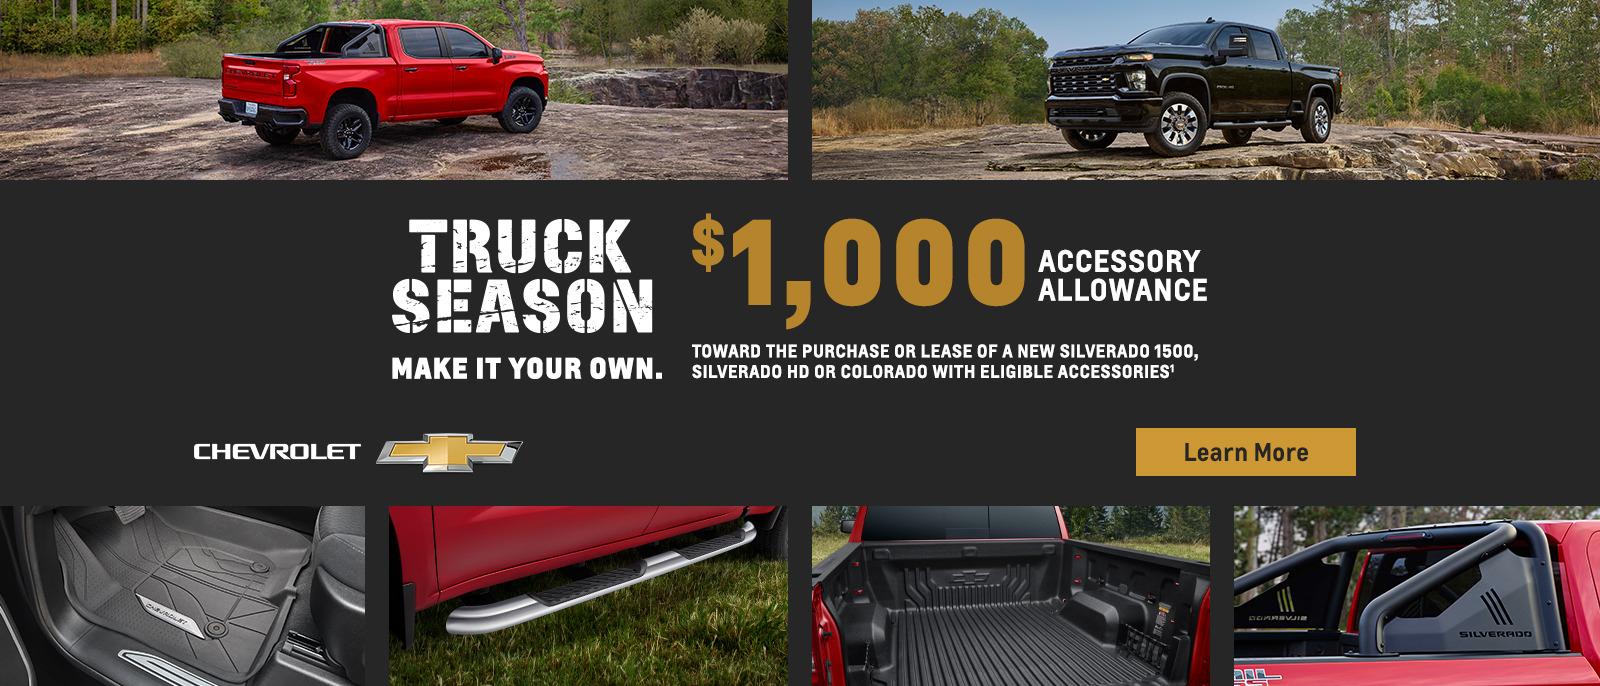 Truck Season. $1,000 Accessory Allowance toward the purchase or lease of a new Silverado 1500, Silverado HD or Colorado with eligible accessories.